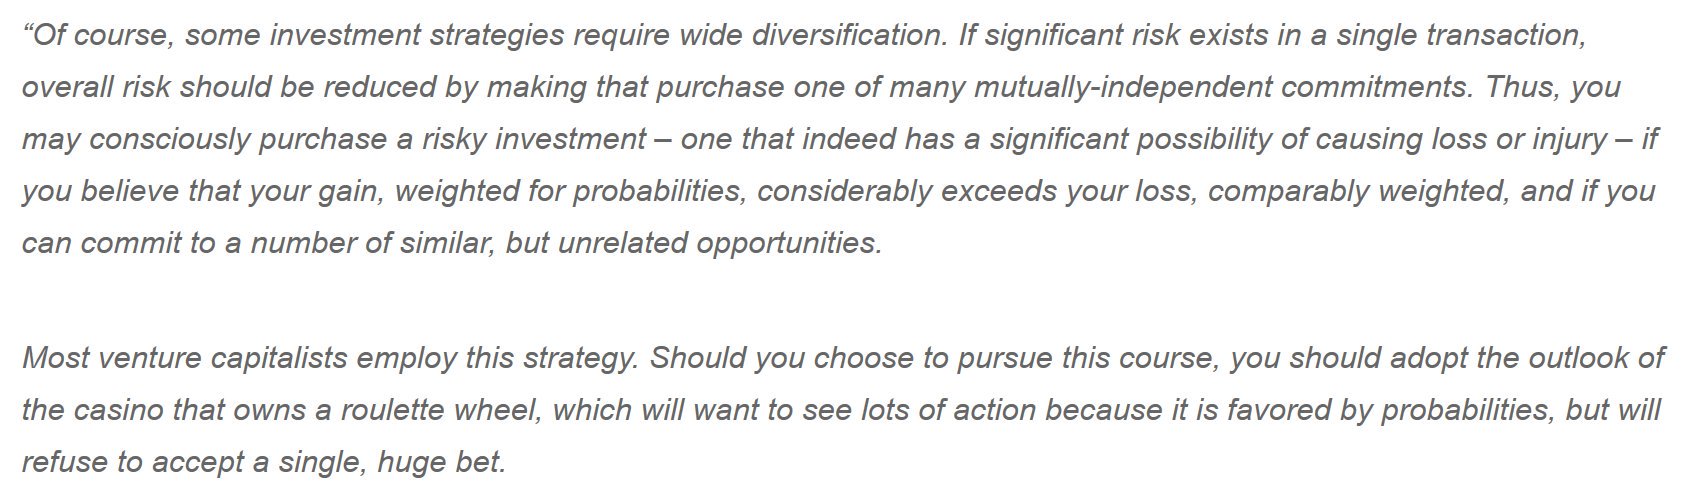 Warren Buffett, on Diversification and Portfolio Construction